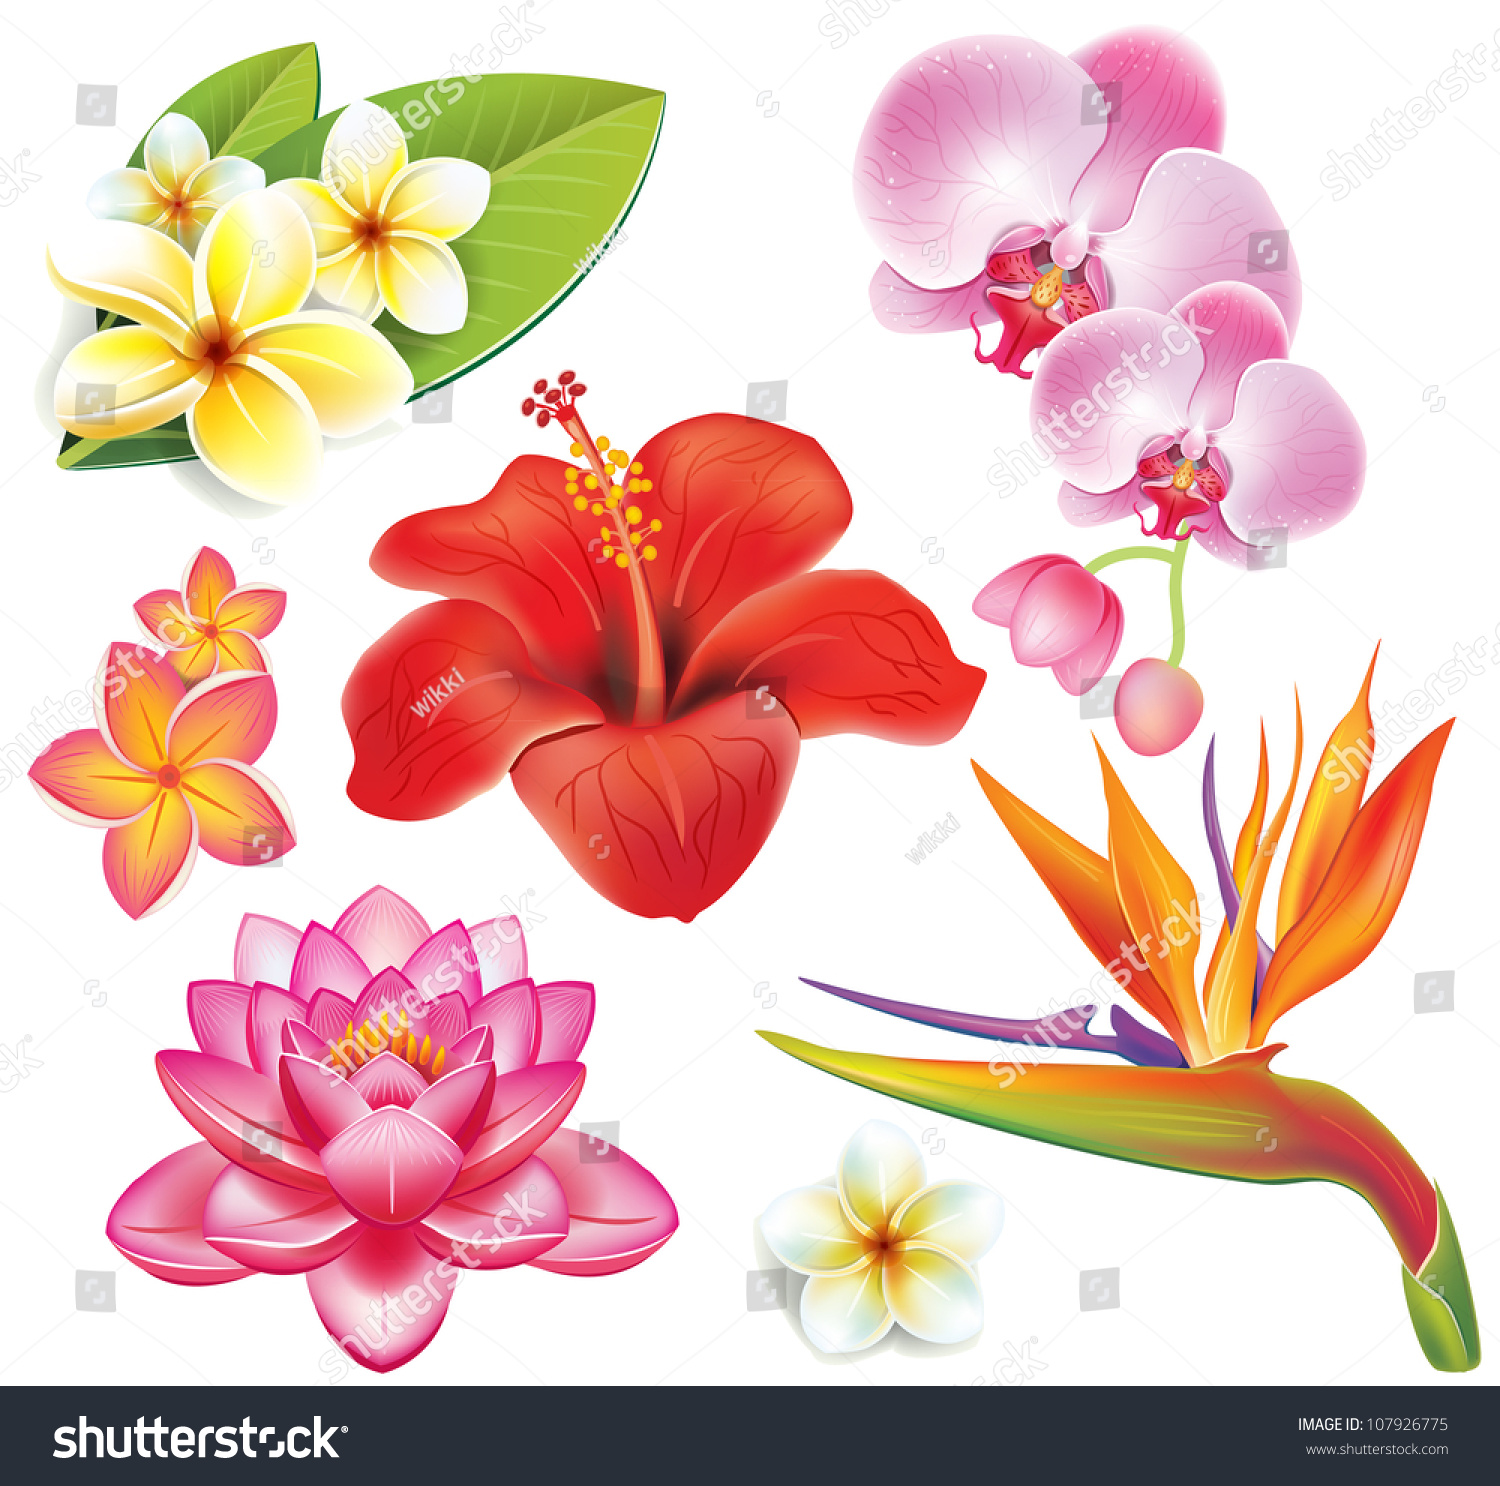 Set Of Tropical Flowers Stock Vector Illustration 107926775 : Shutterstock